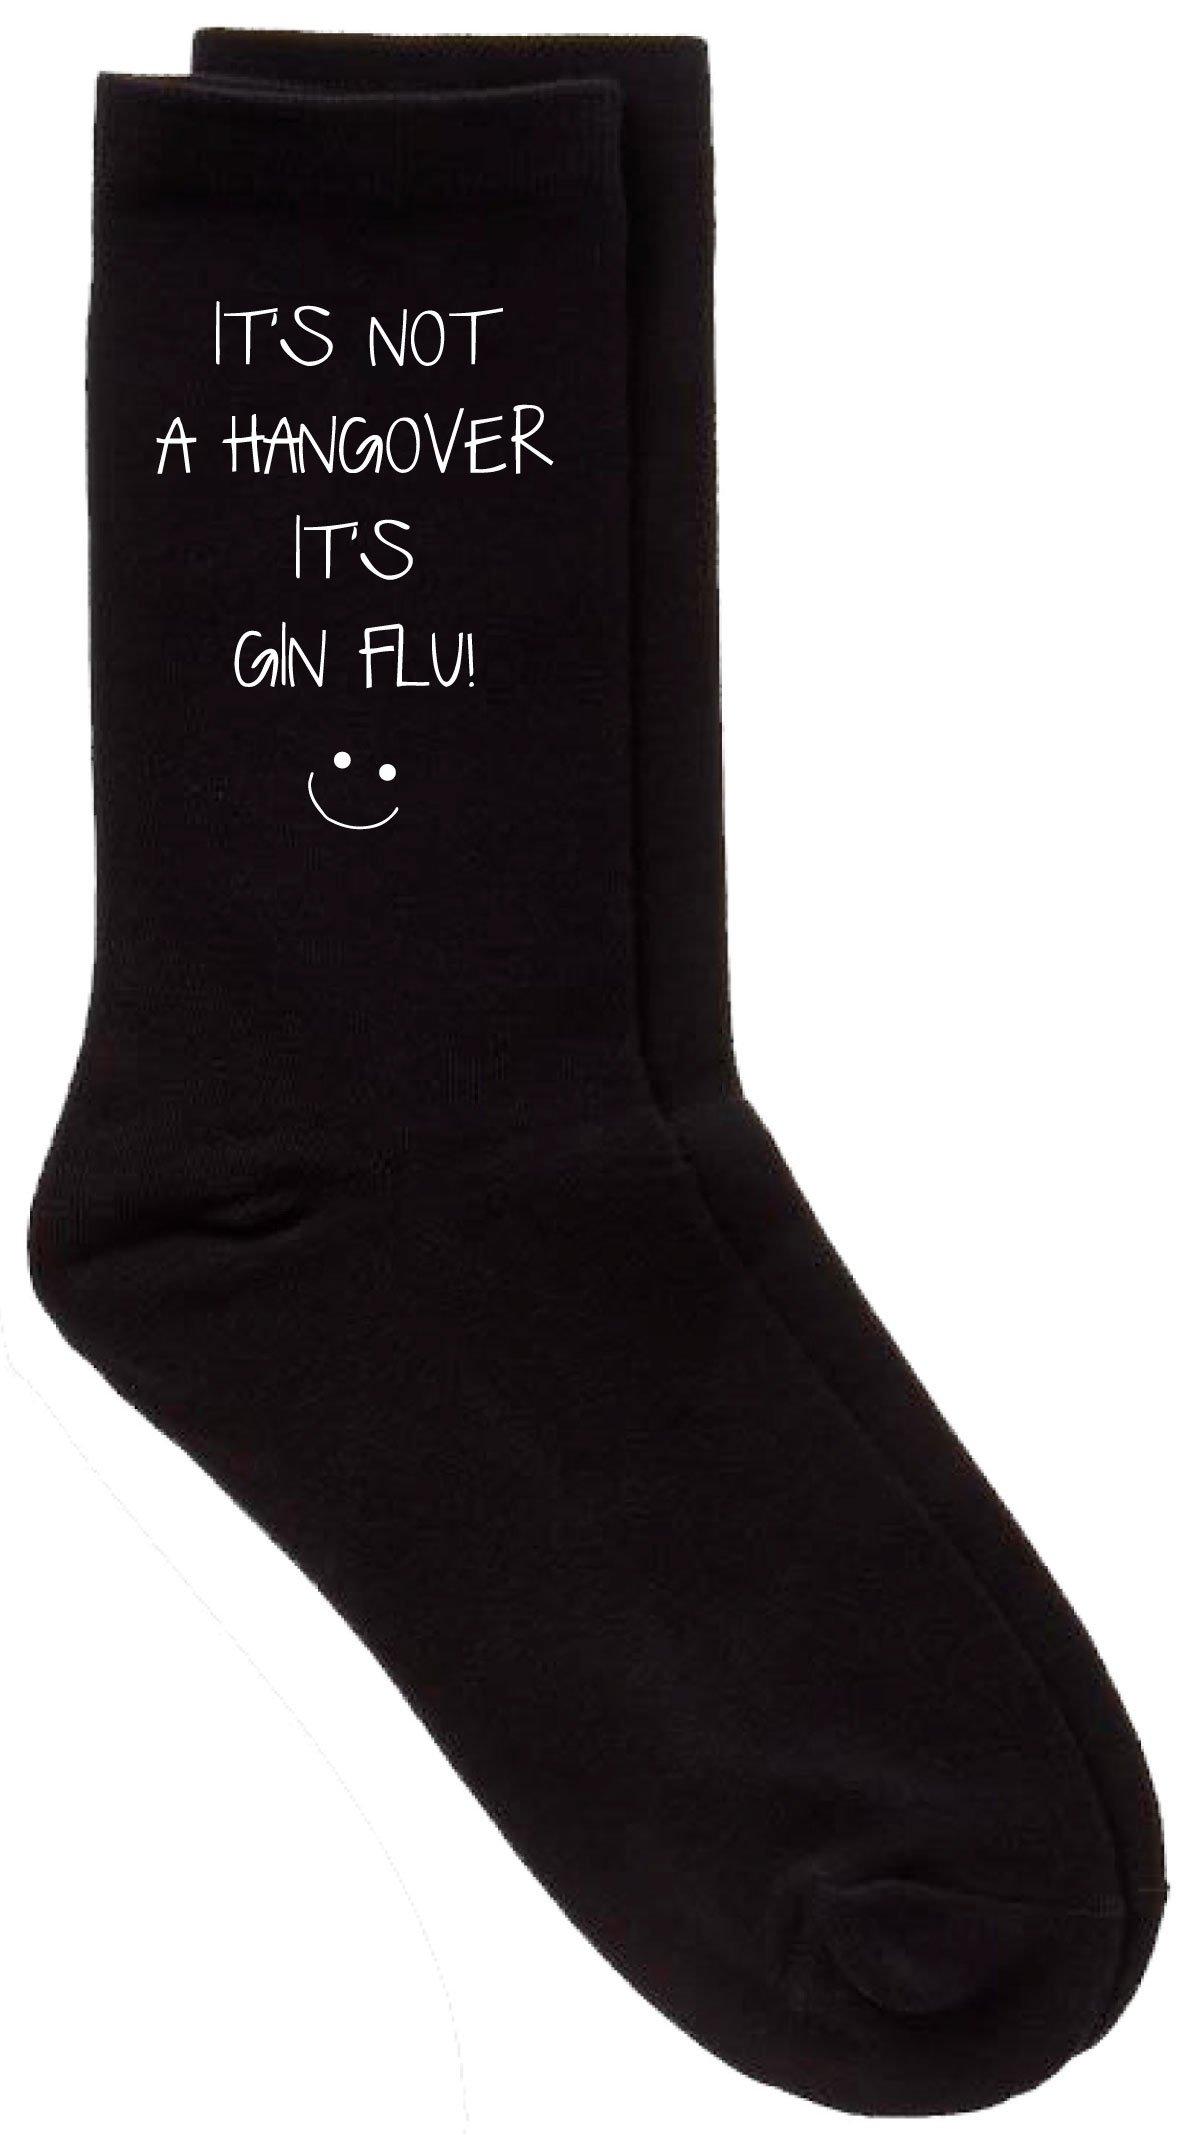 Gin Flu Black Socks